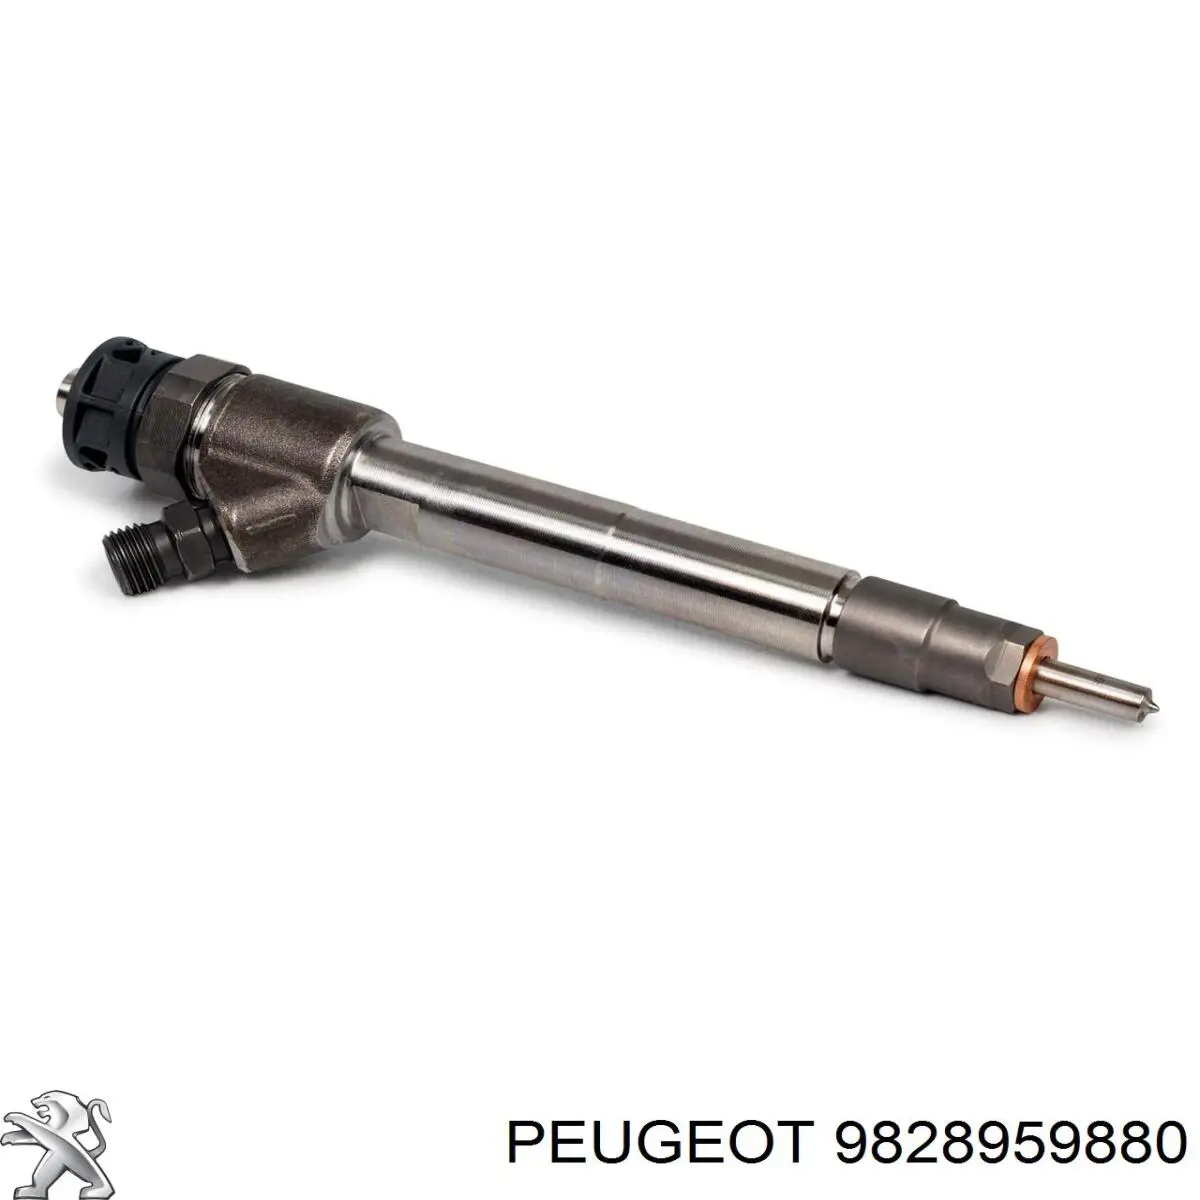 Inyector de combustible 9828959880 Peugeot/Citroen